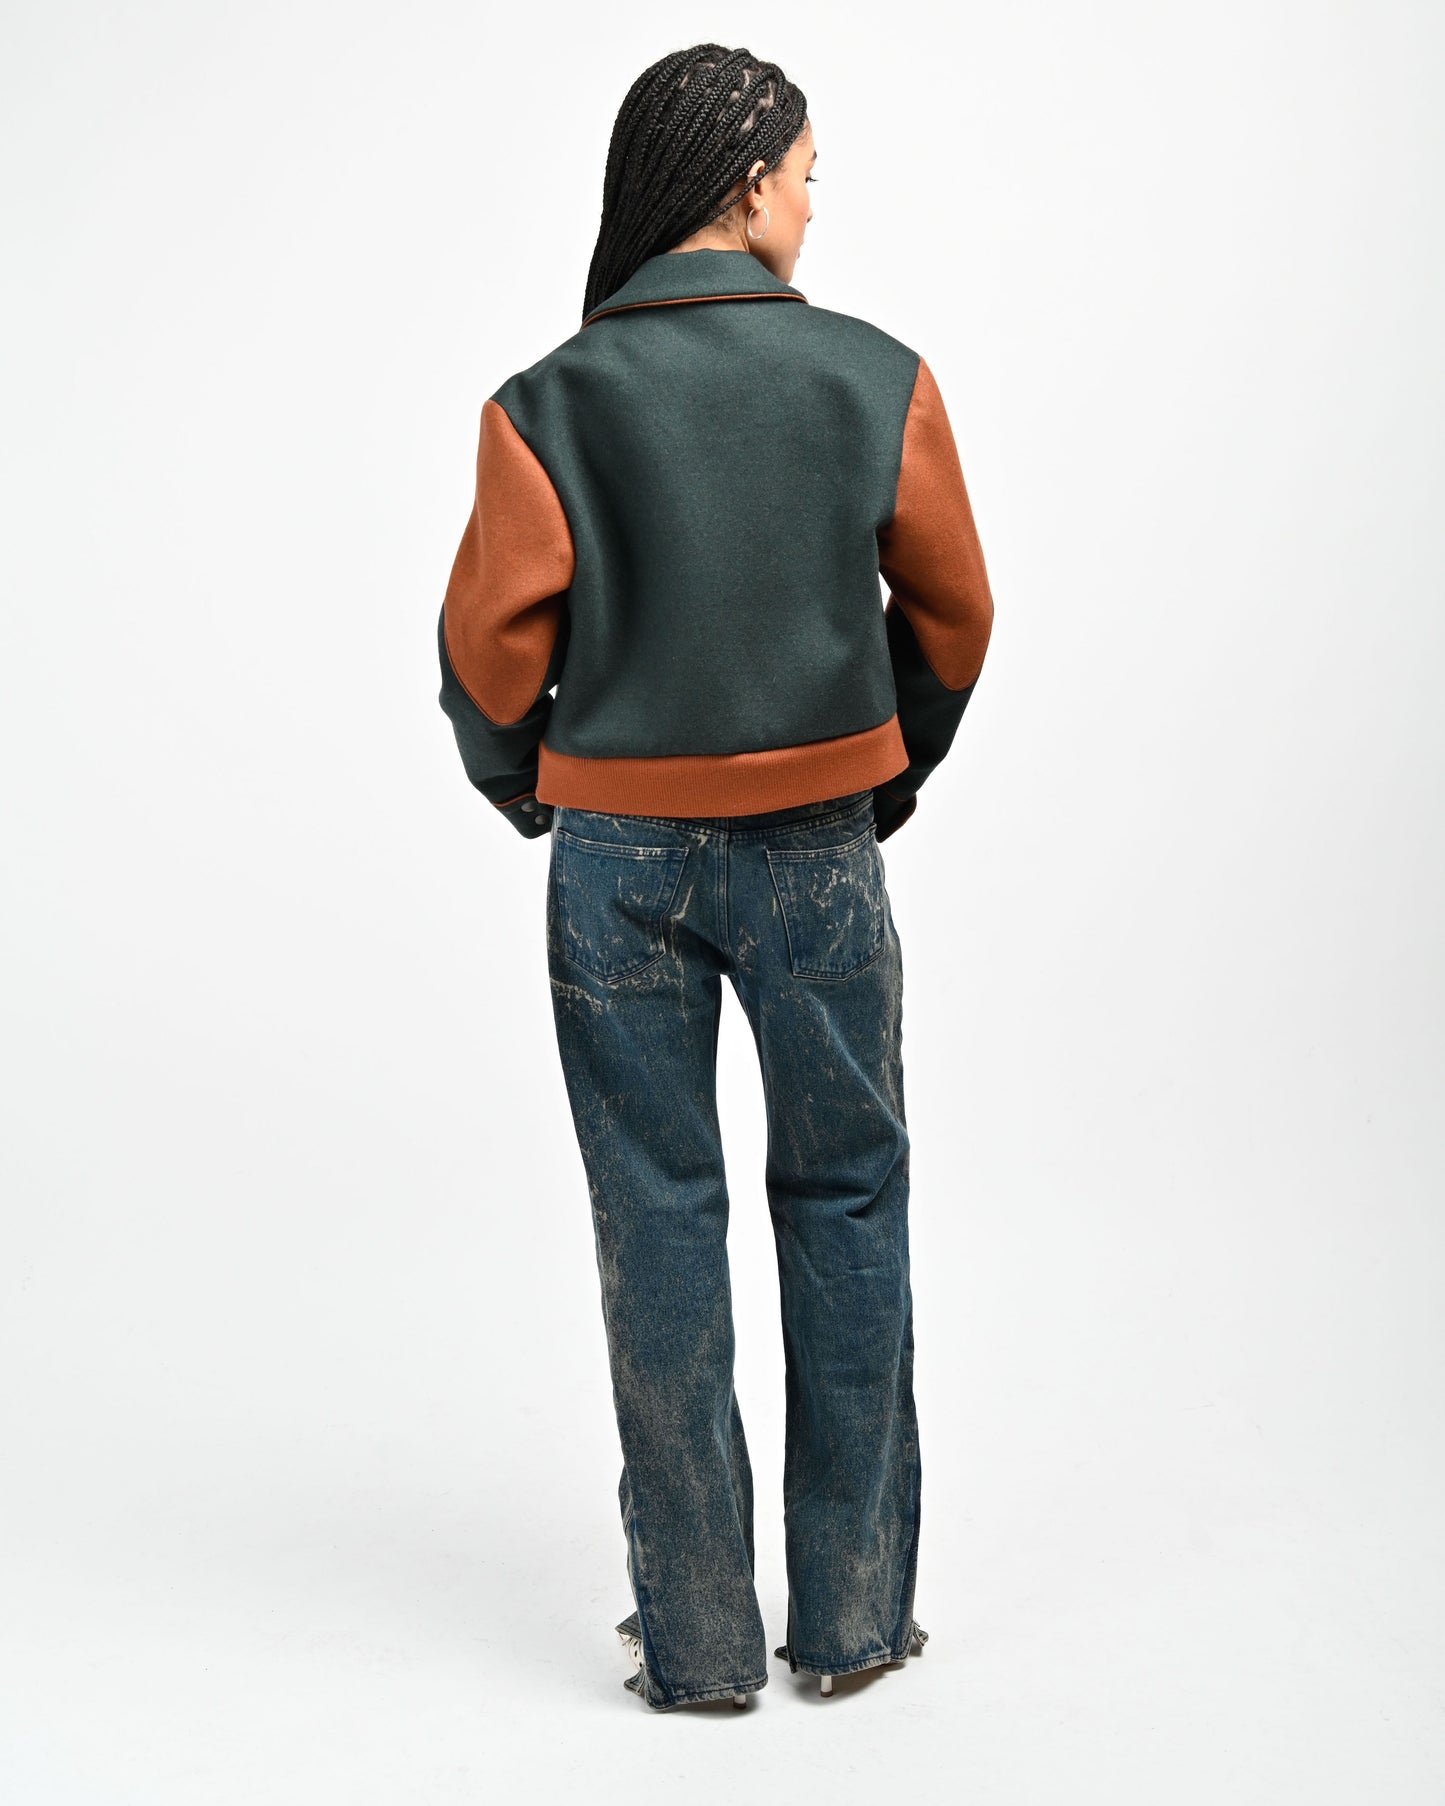 Back View of Model wearing Rue Varsity Jacket by Aseye Studio